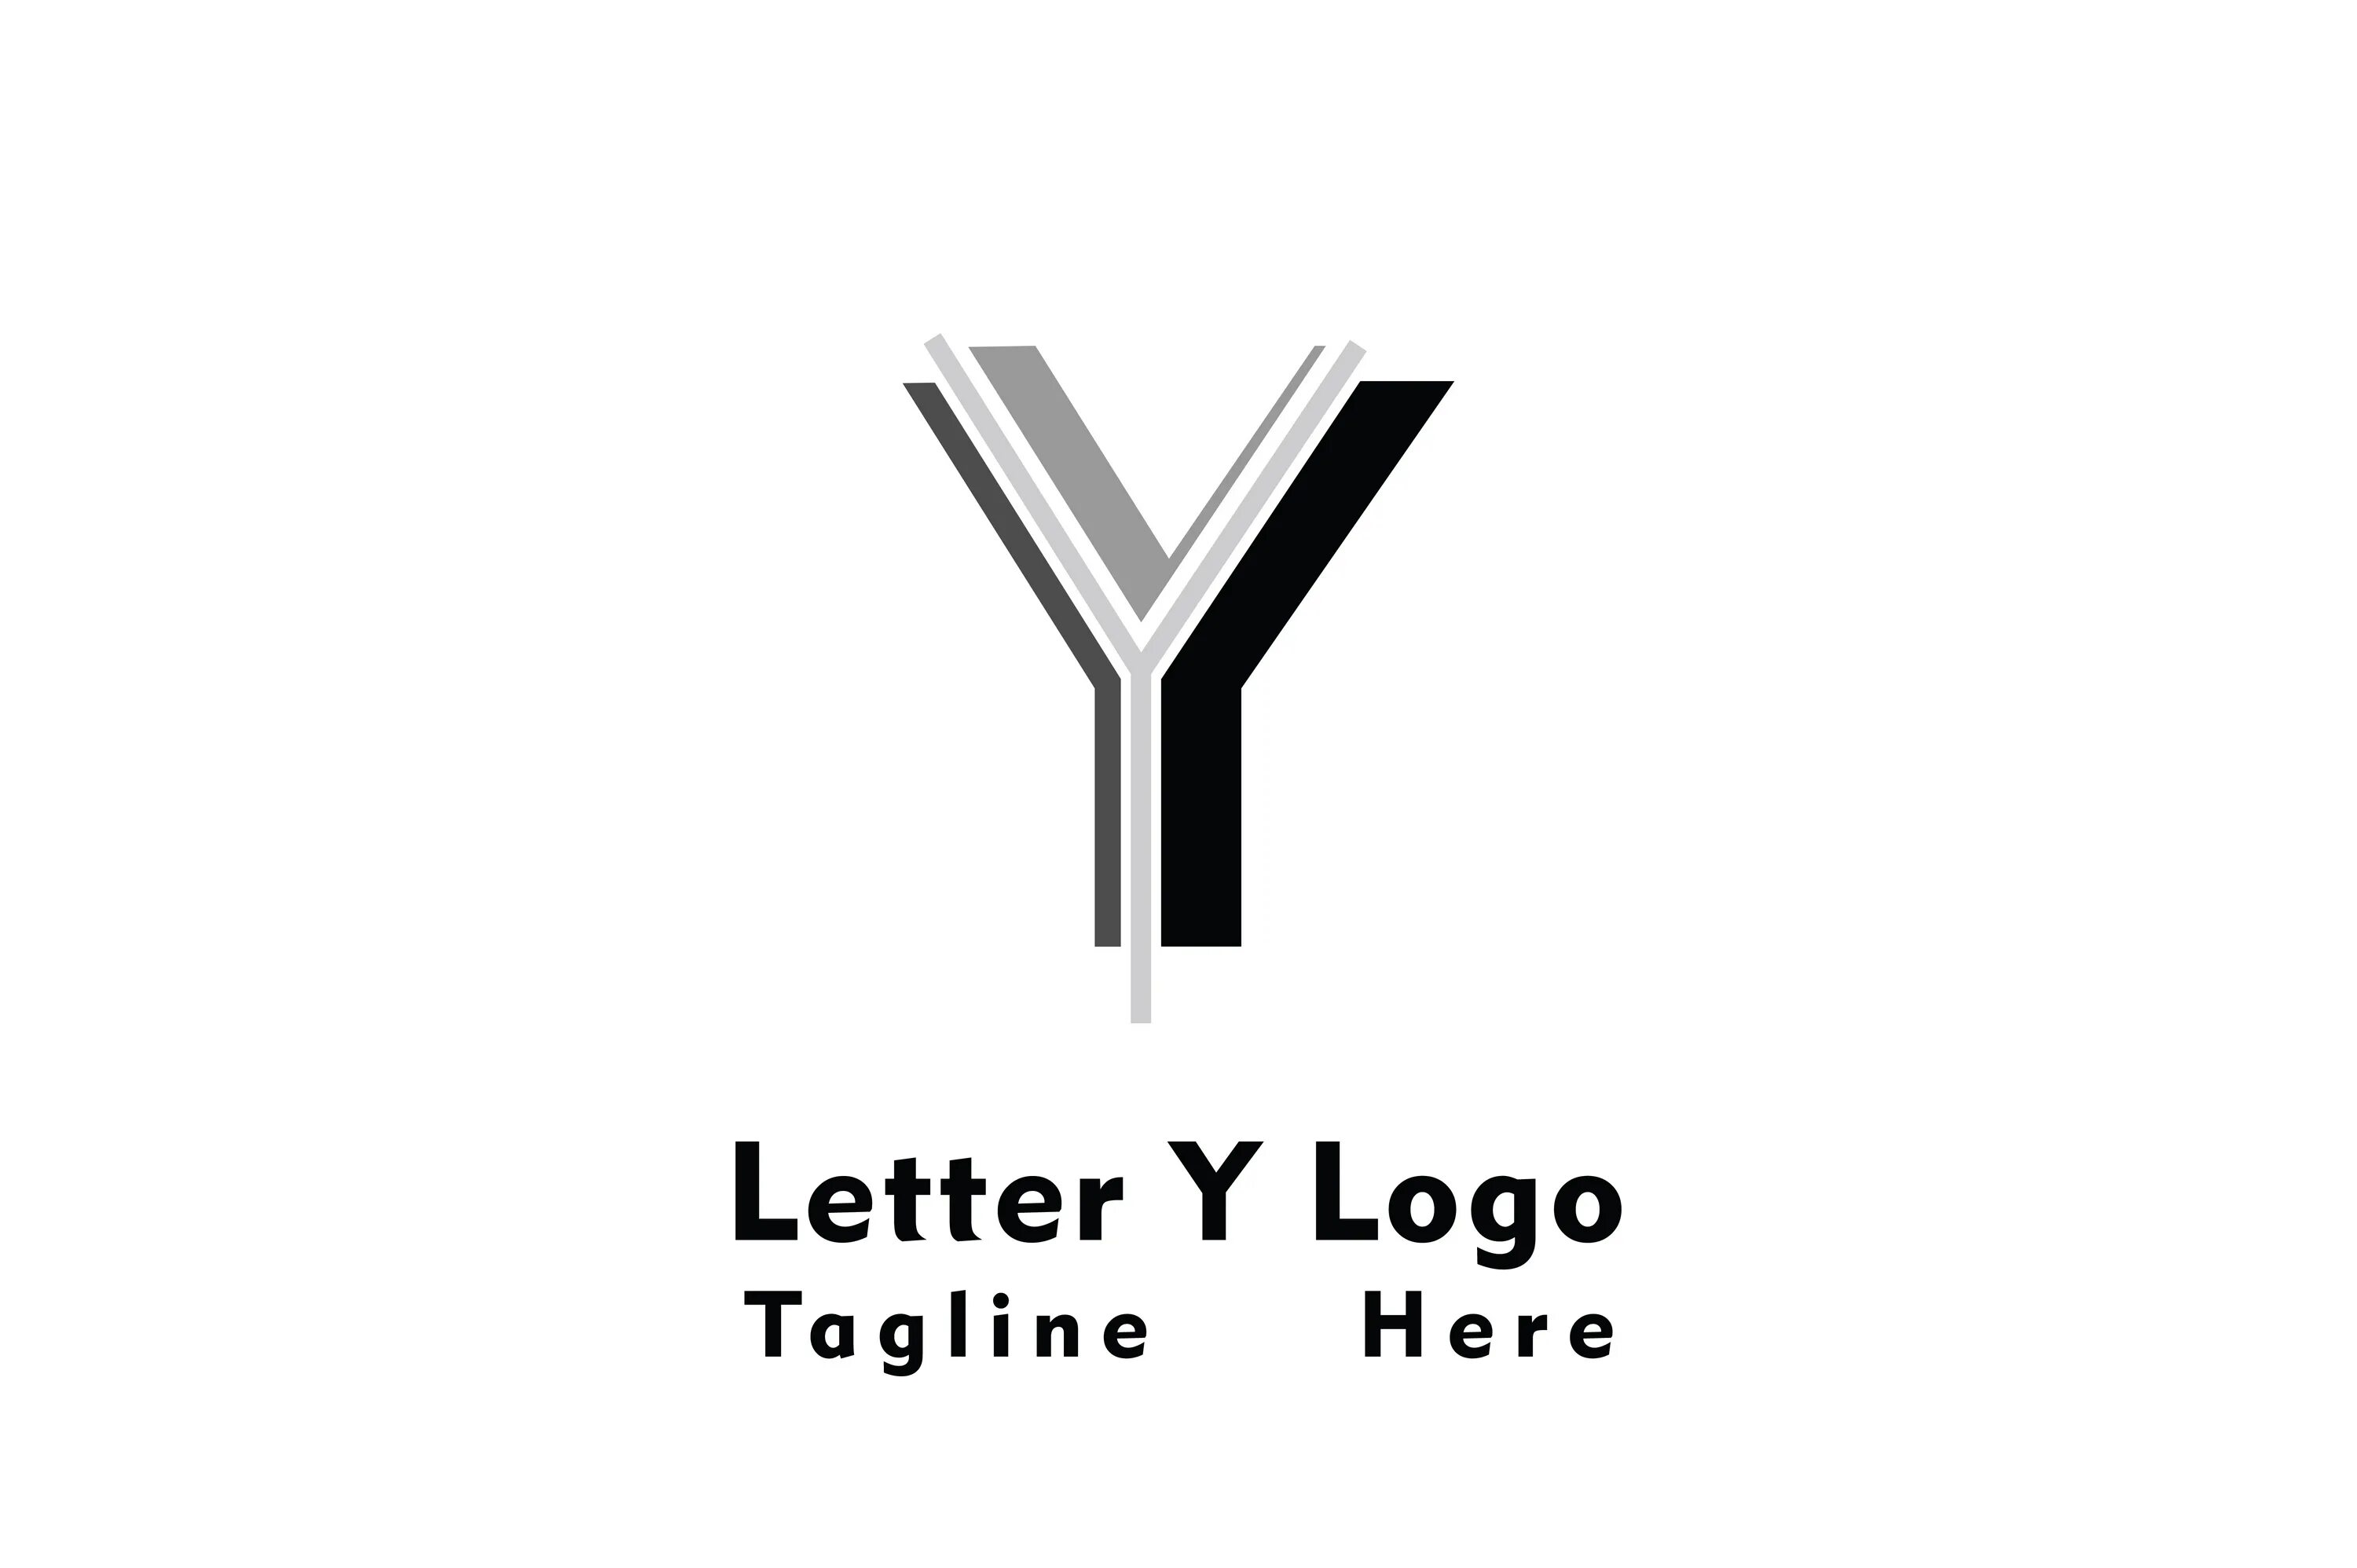 Логотип й. Letter y logo. Логотип i y. Interacty логотип. Letter logos